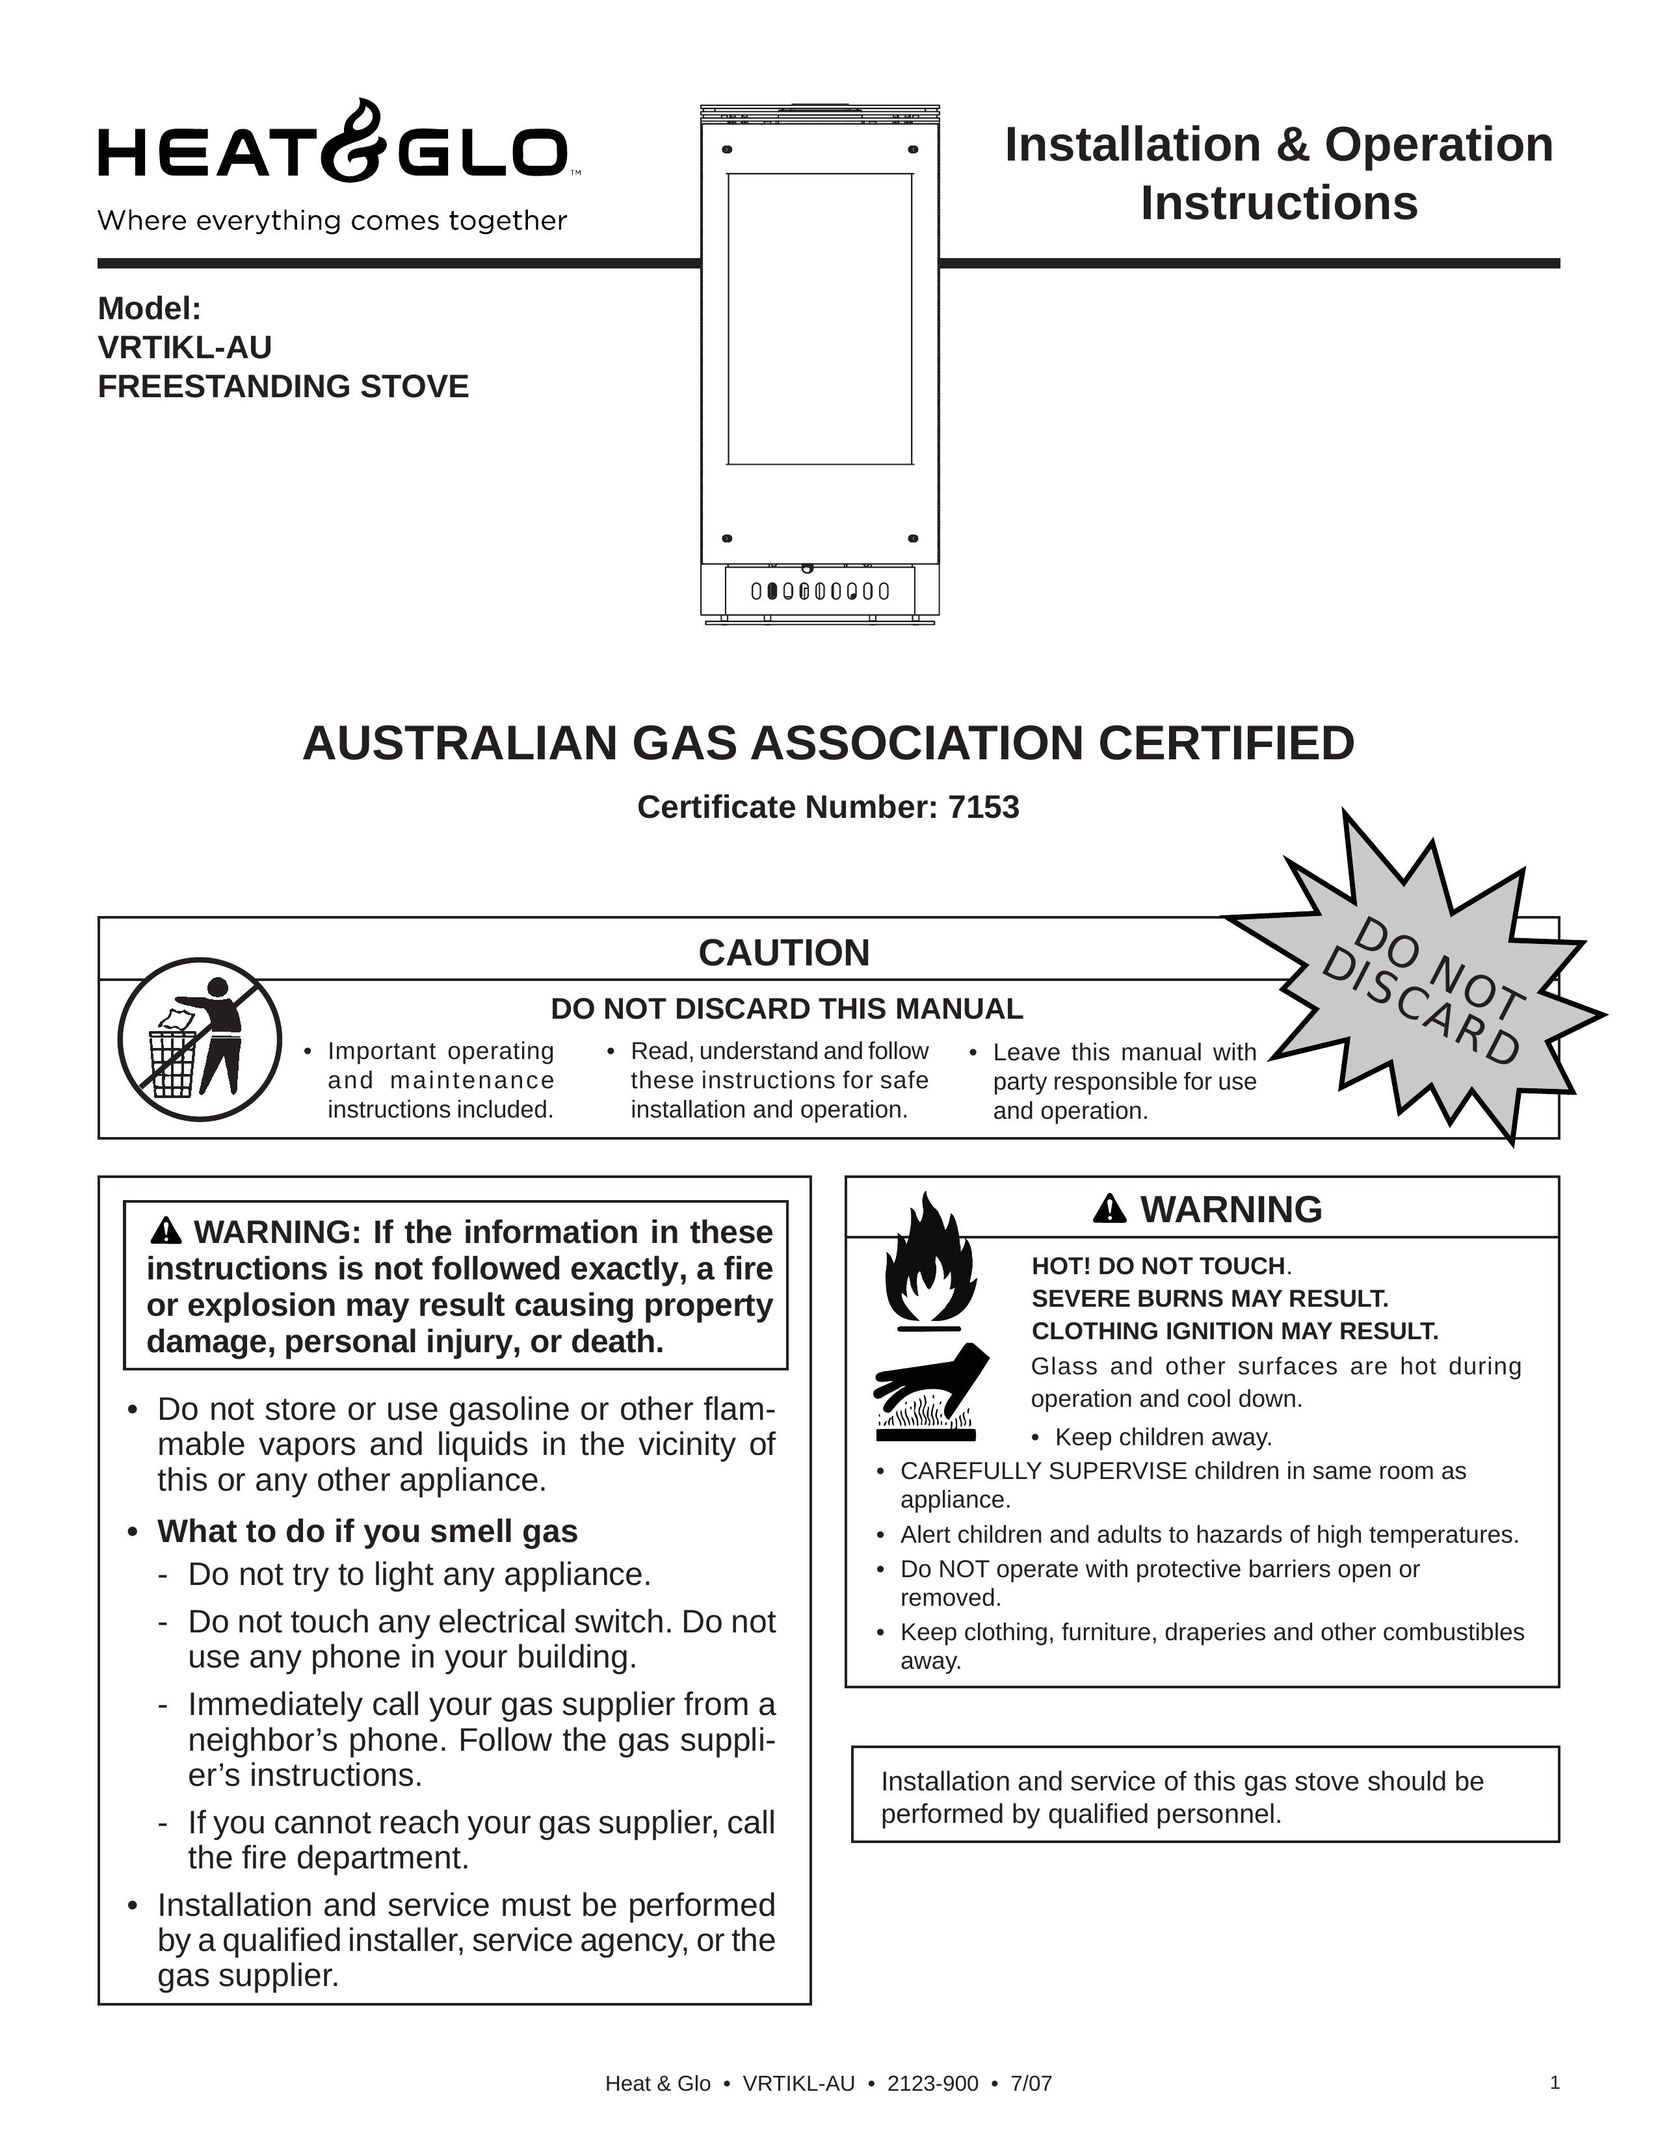 Heat & Glo LifeStyle VRTIKL-AU Cooktop User Manual